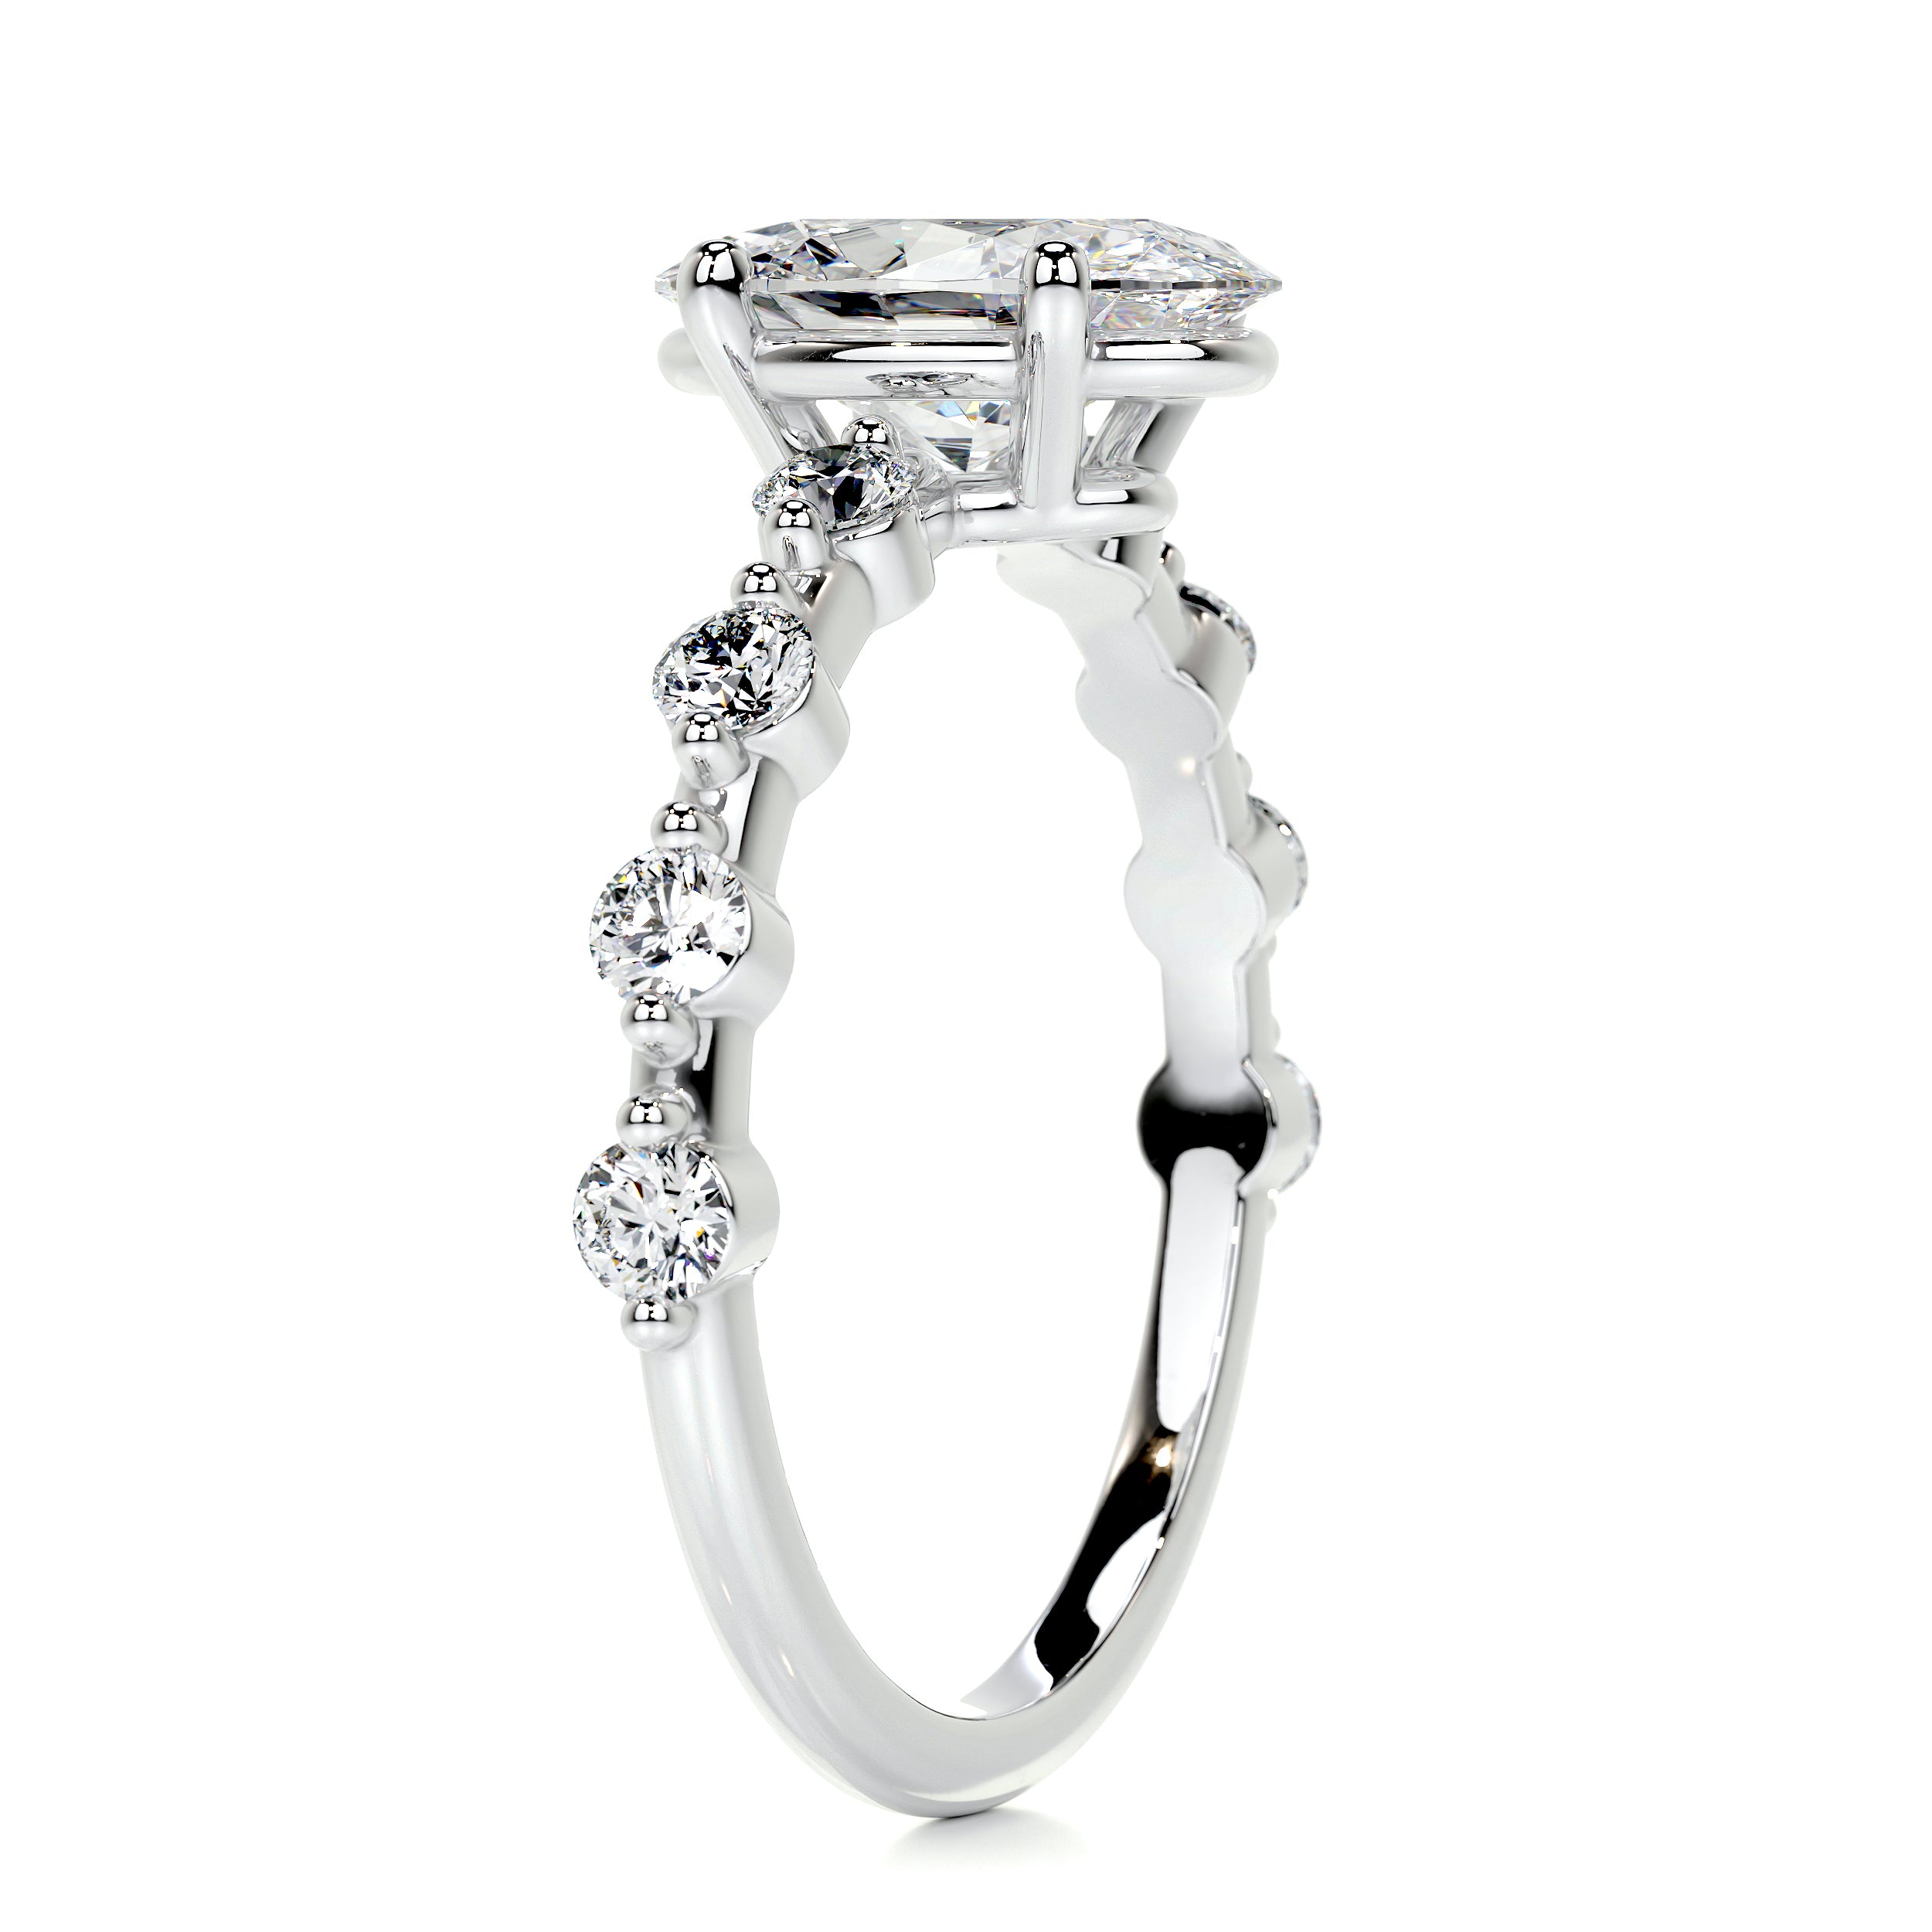 Bell Diamond Engagement Ring   (1.5 Carat) -14K White Gold